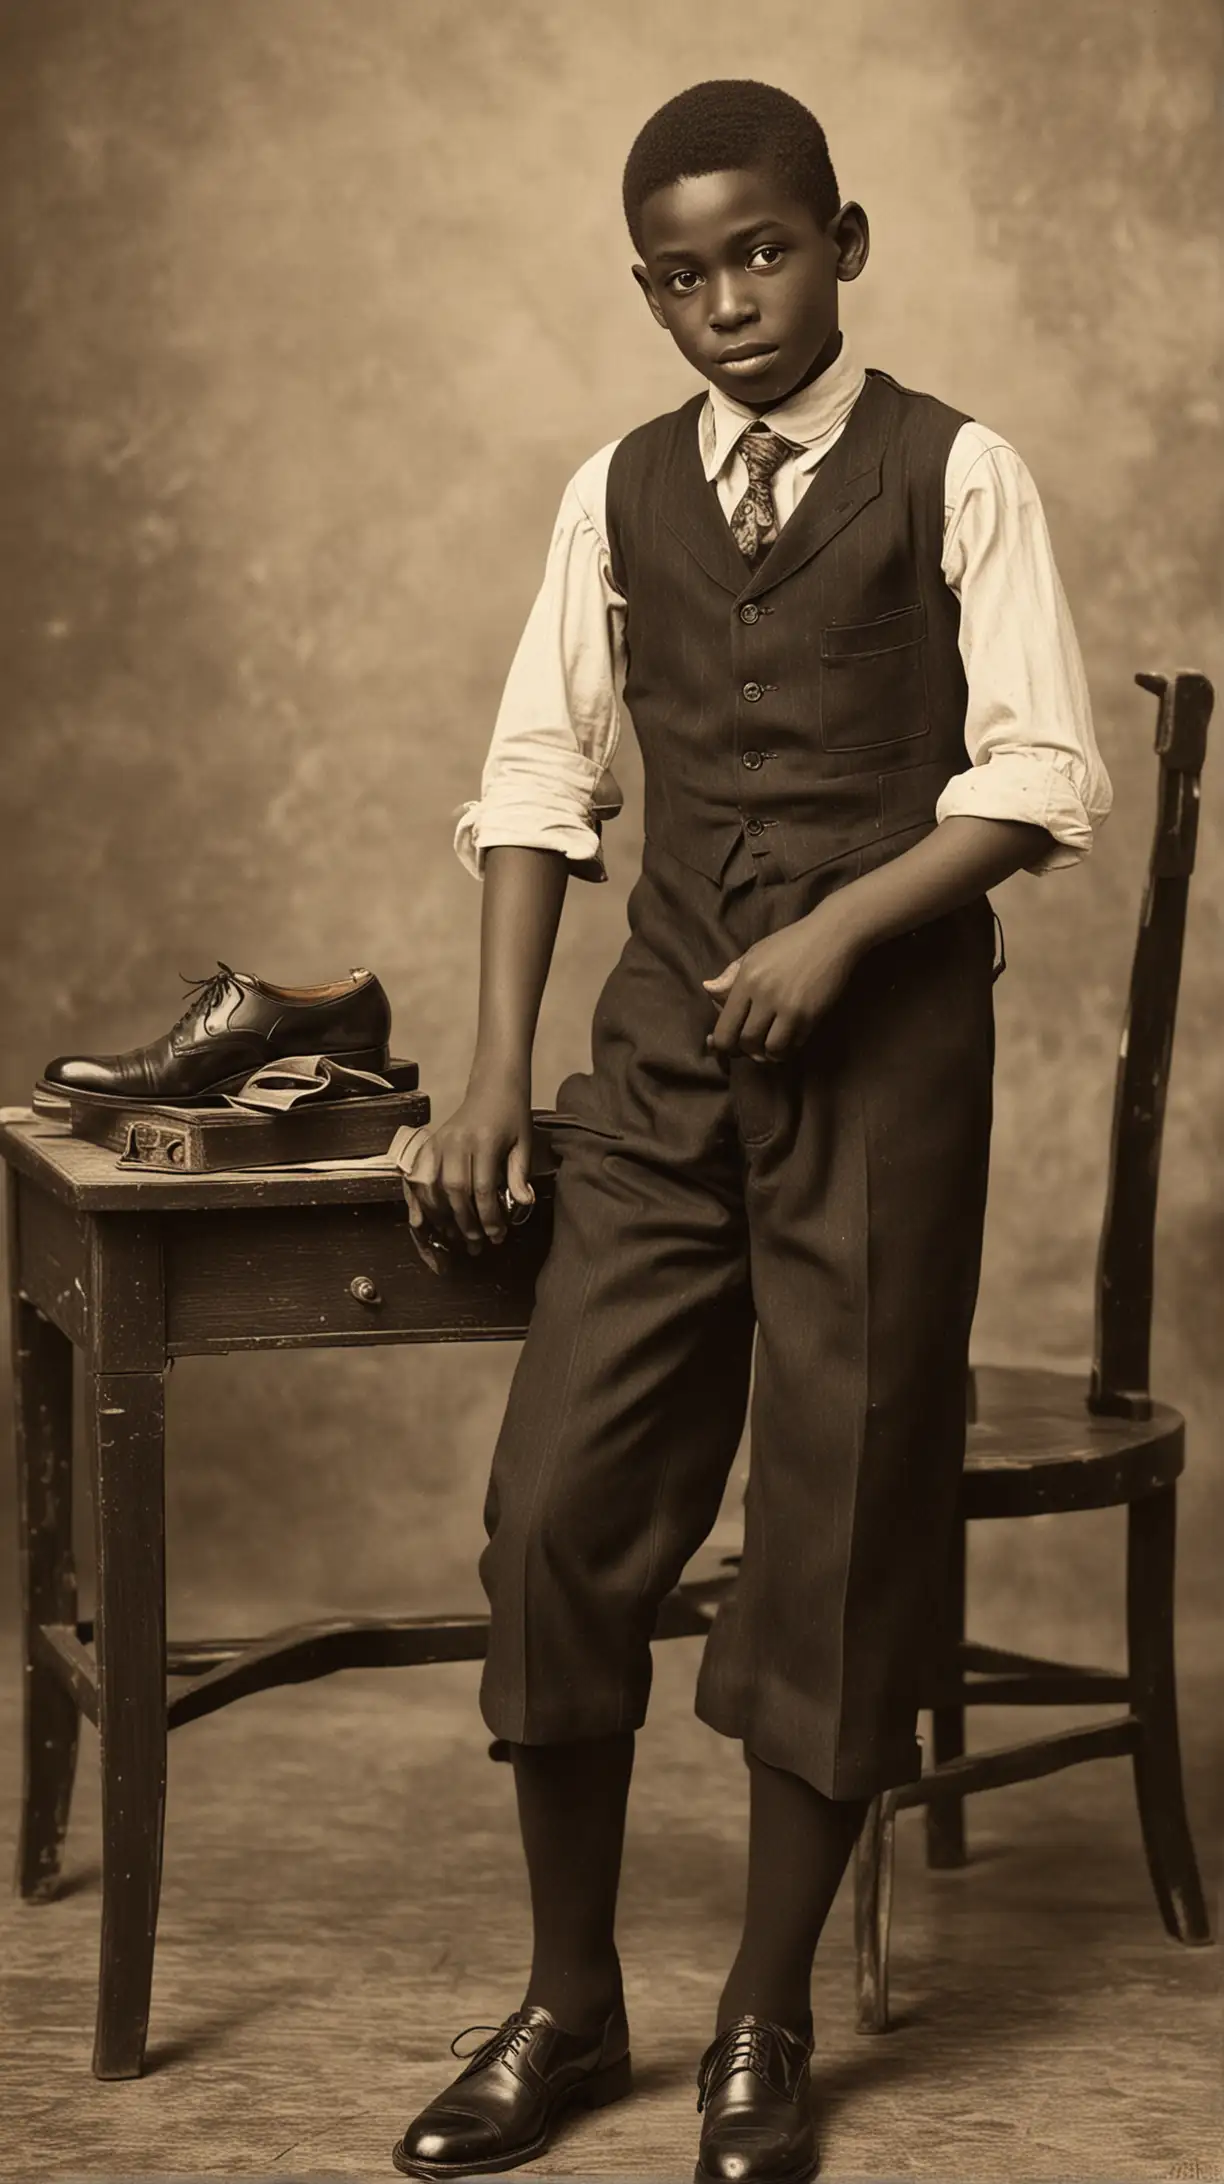 1925 Shoeshine Black boy